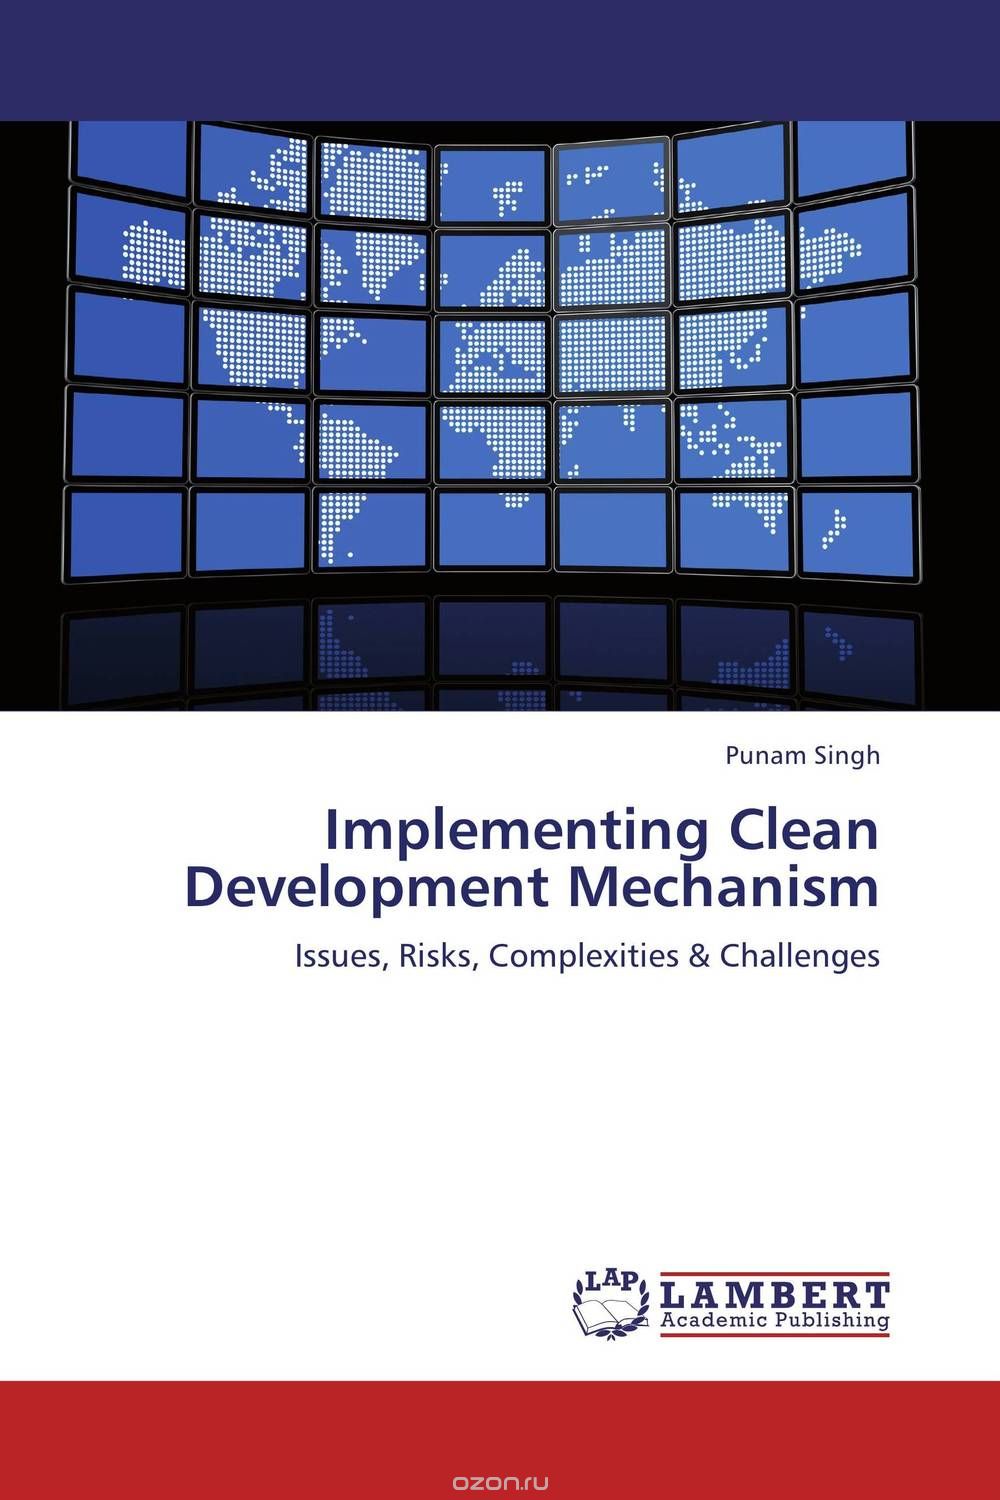 Скачать книгу "Implementing Clean Development Mechanism"